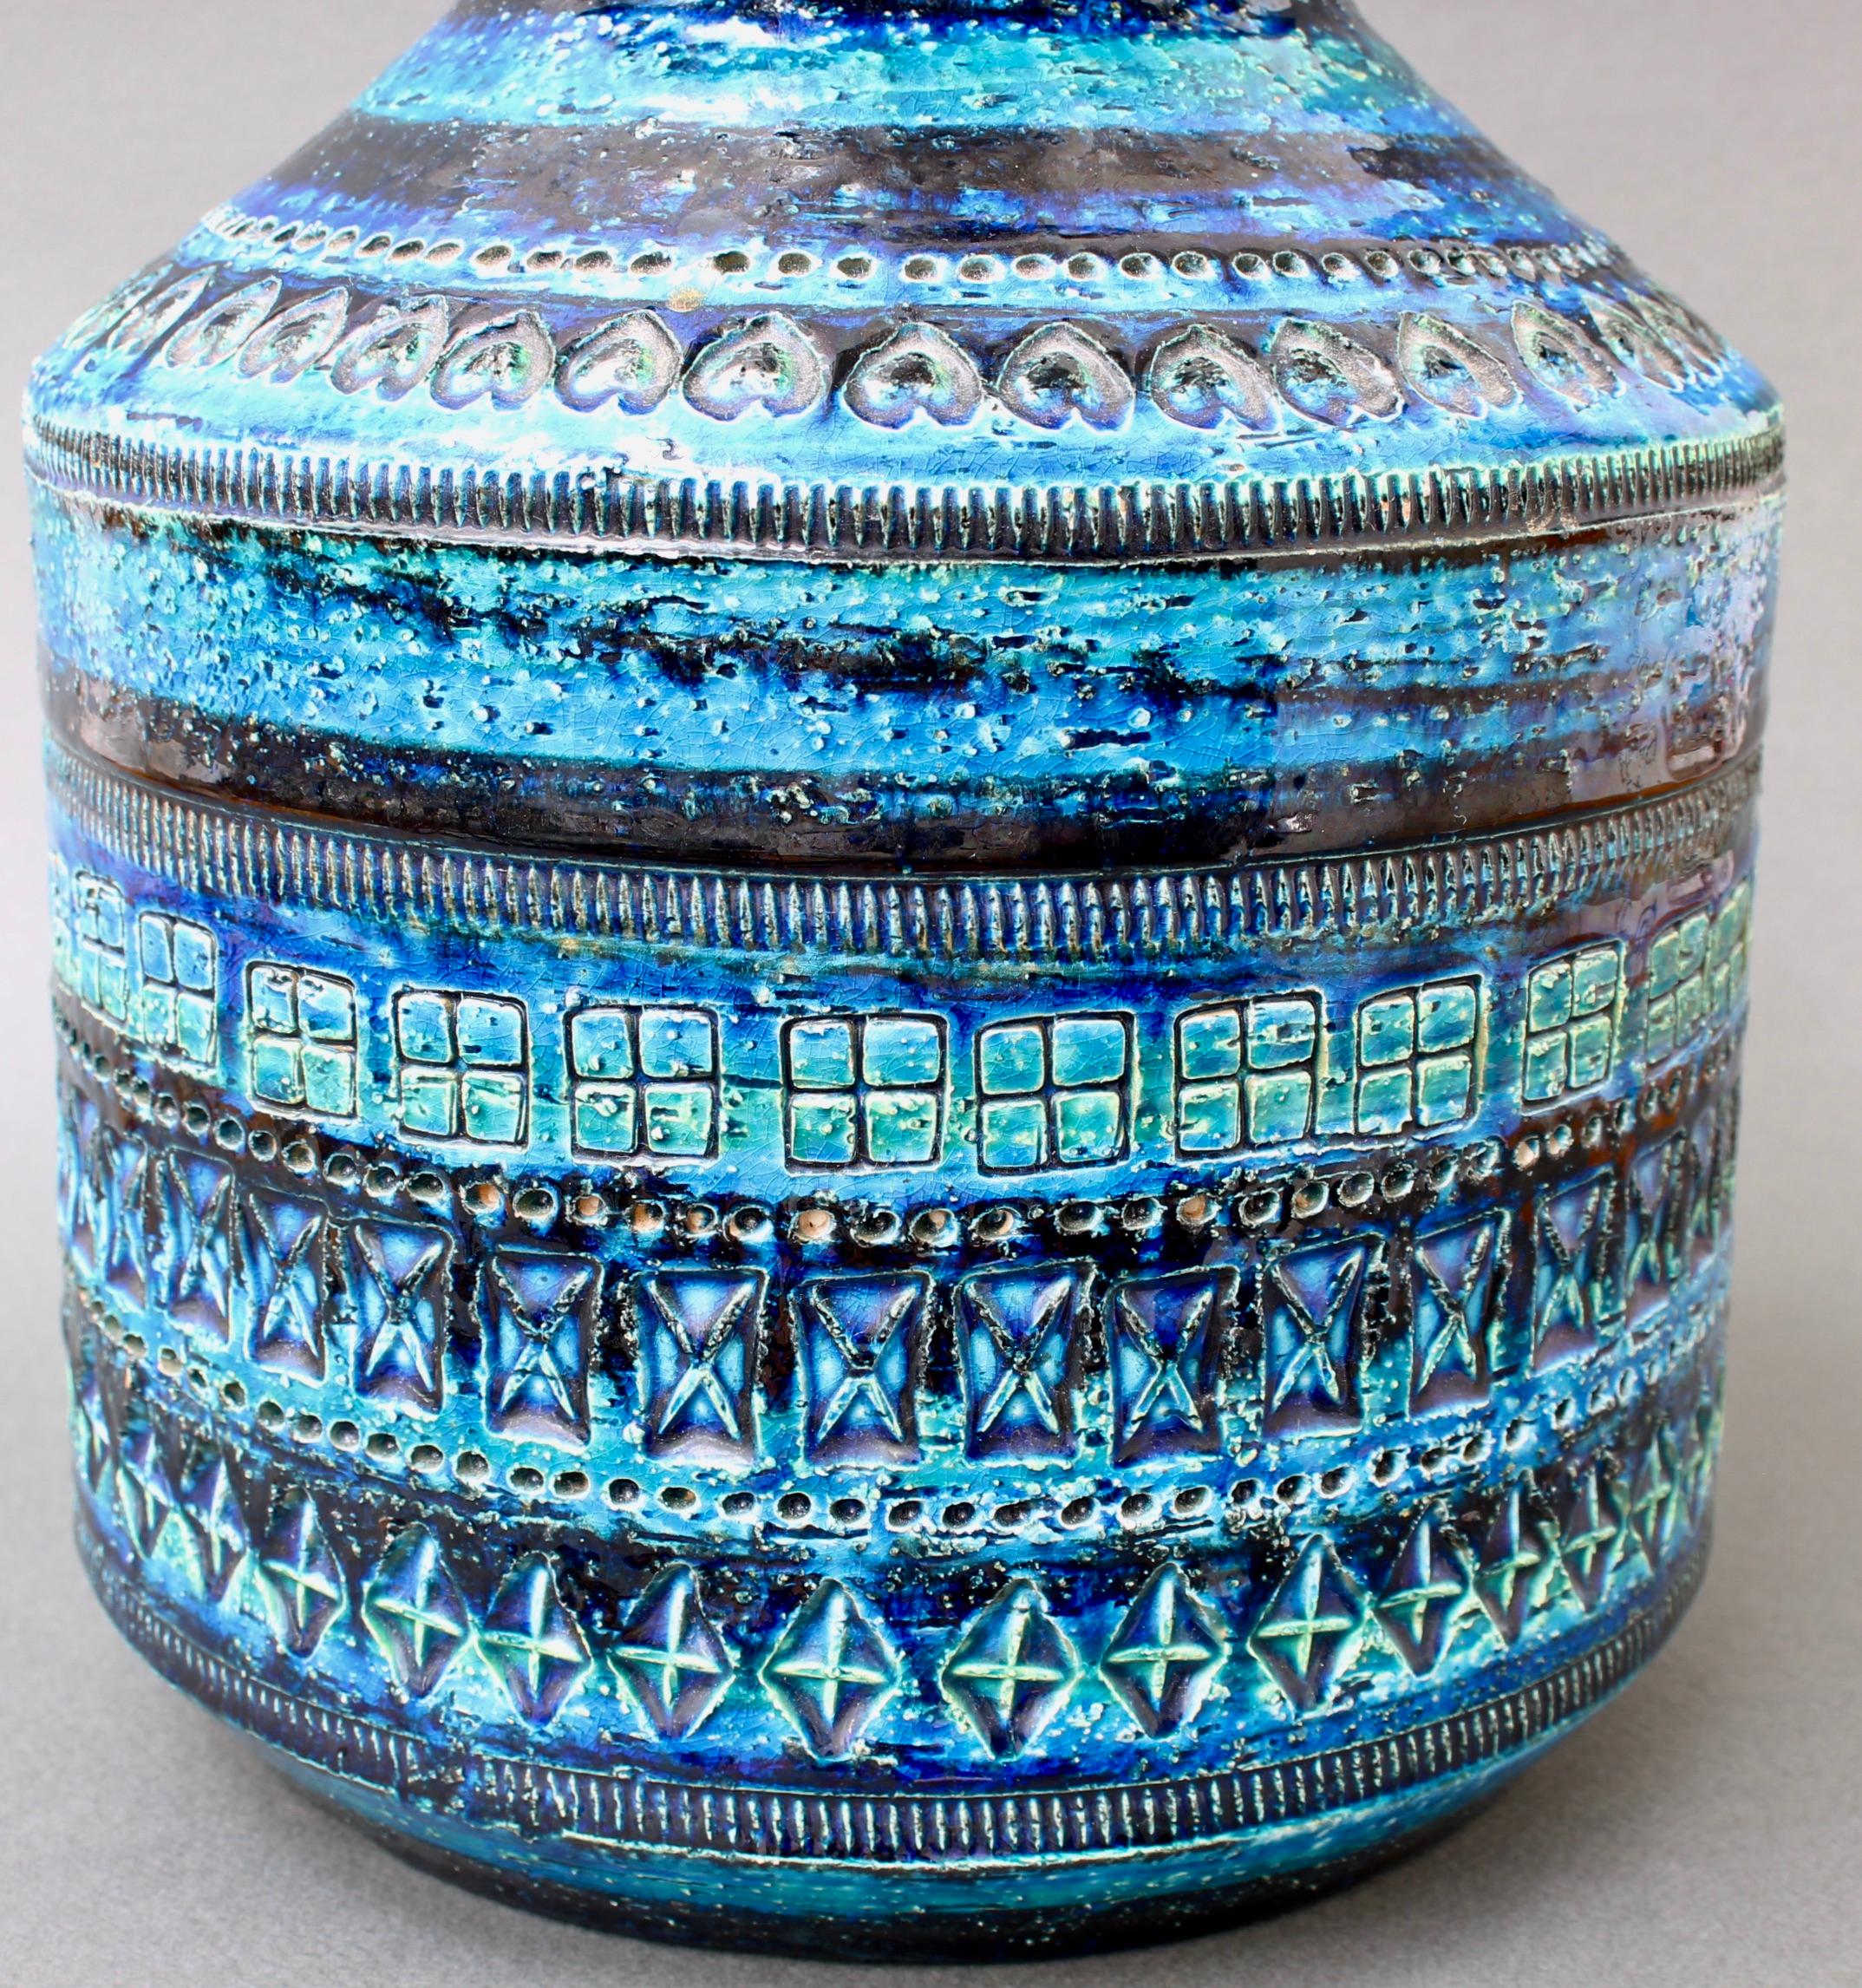 Mid-20th Century Rimini Blu Vase with Geometric Shapes, Aldo Londi for Bitossi, circa 1960s-1970s